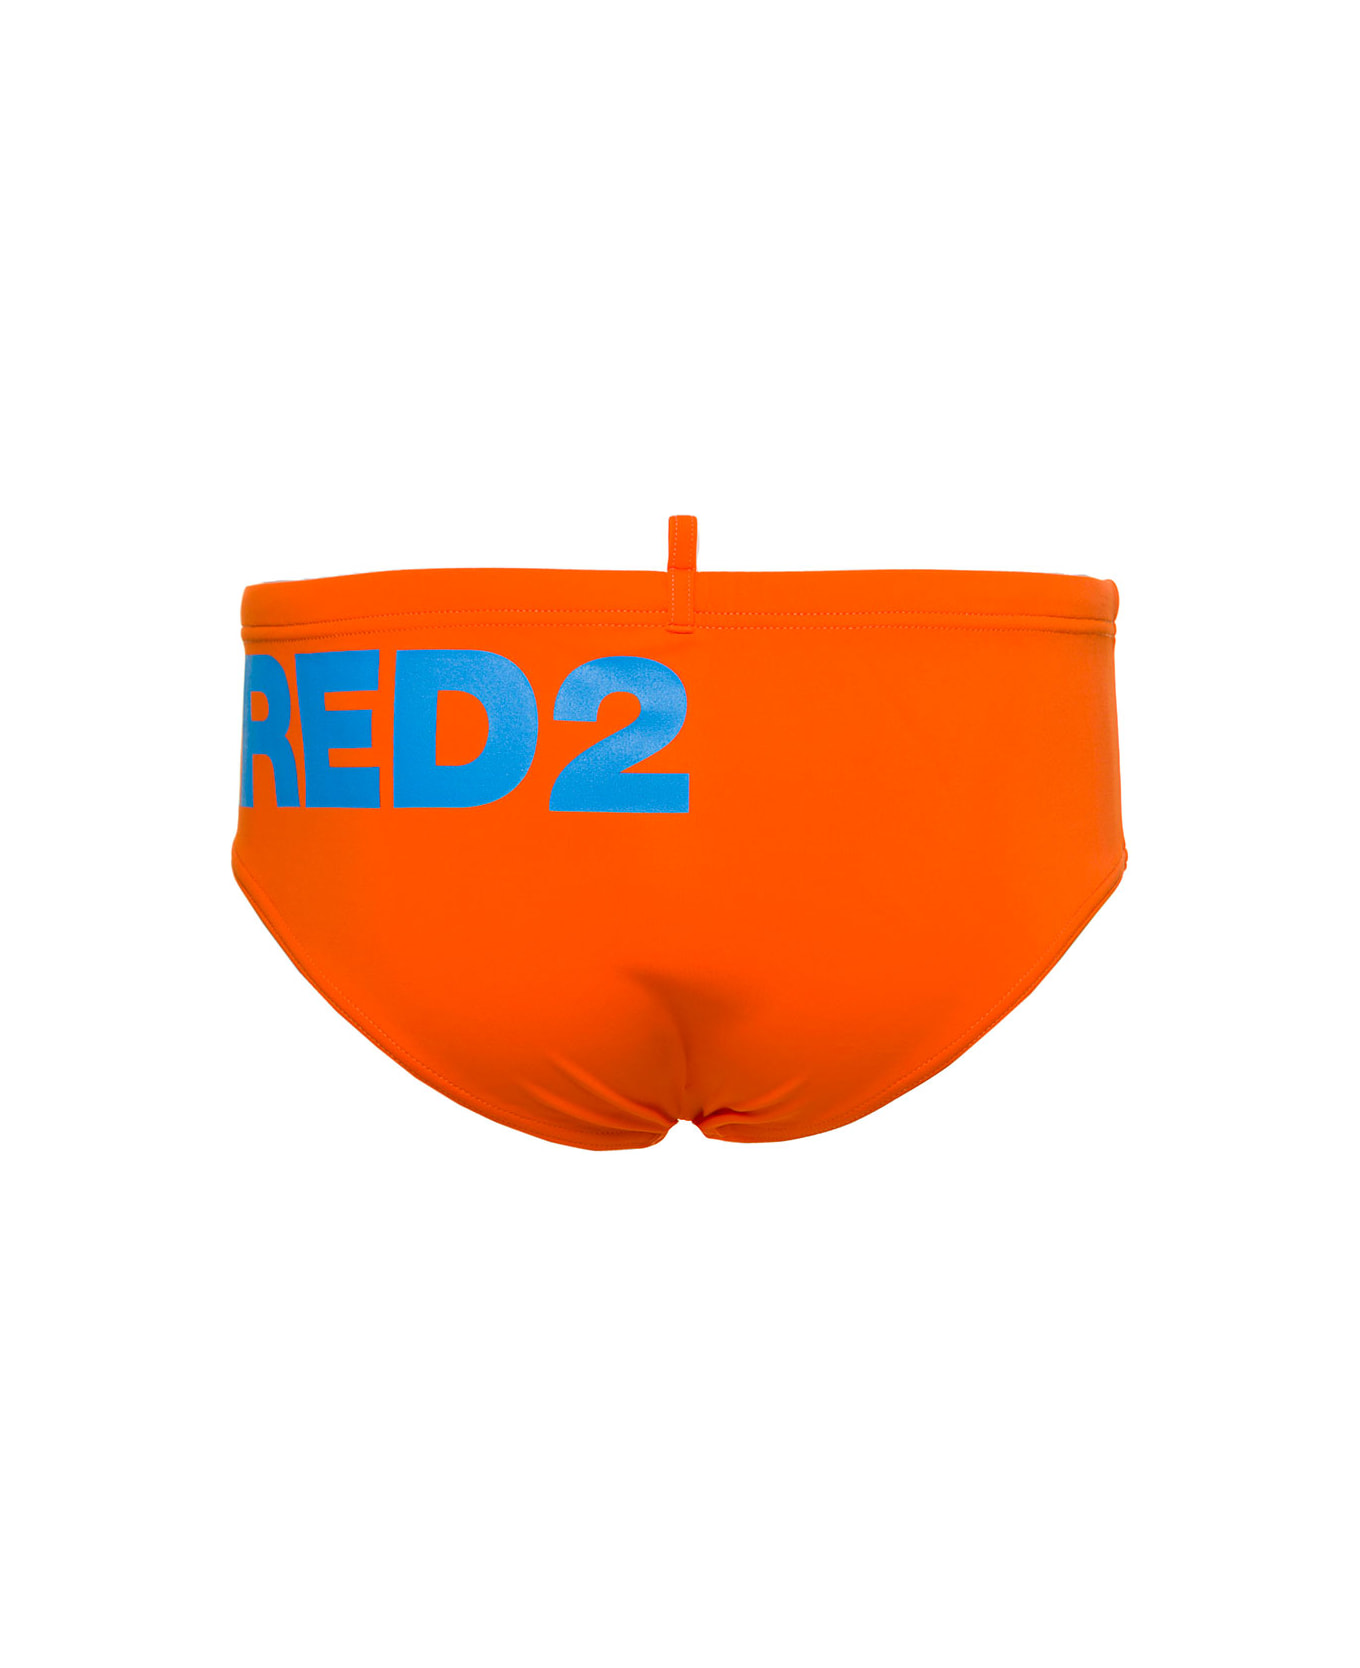 Dsquared2 Orange Swim Briefs With Printed Logo In Polyamide Man - Orange